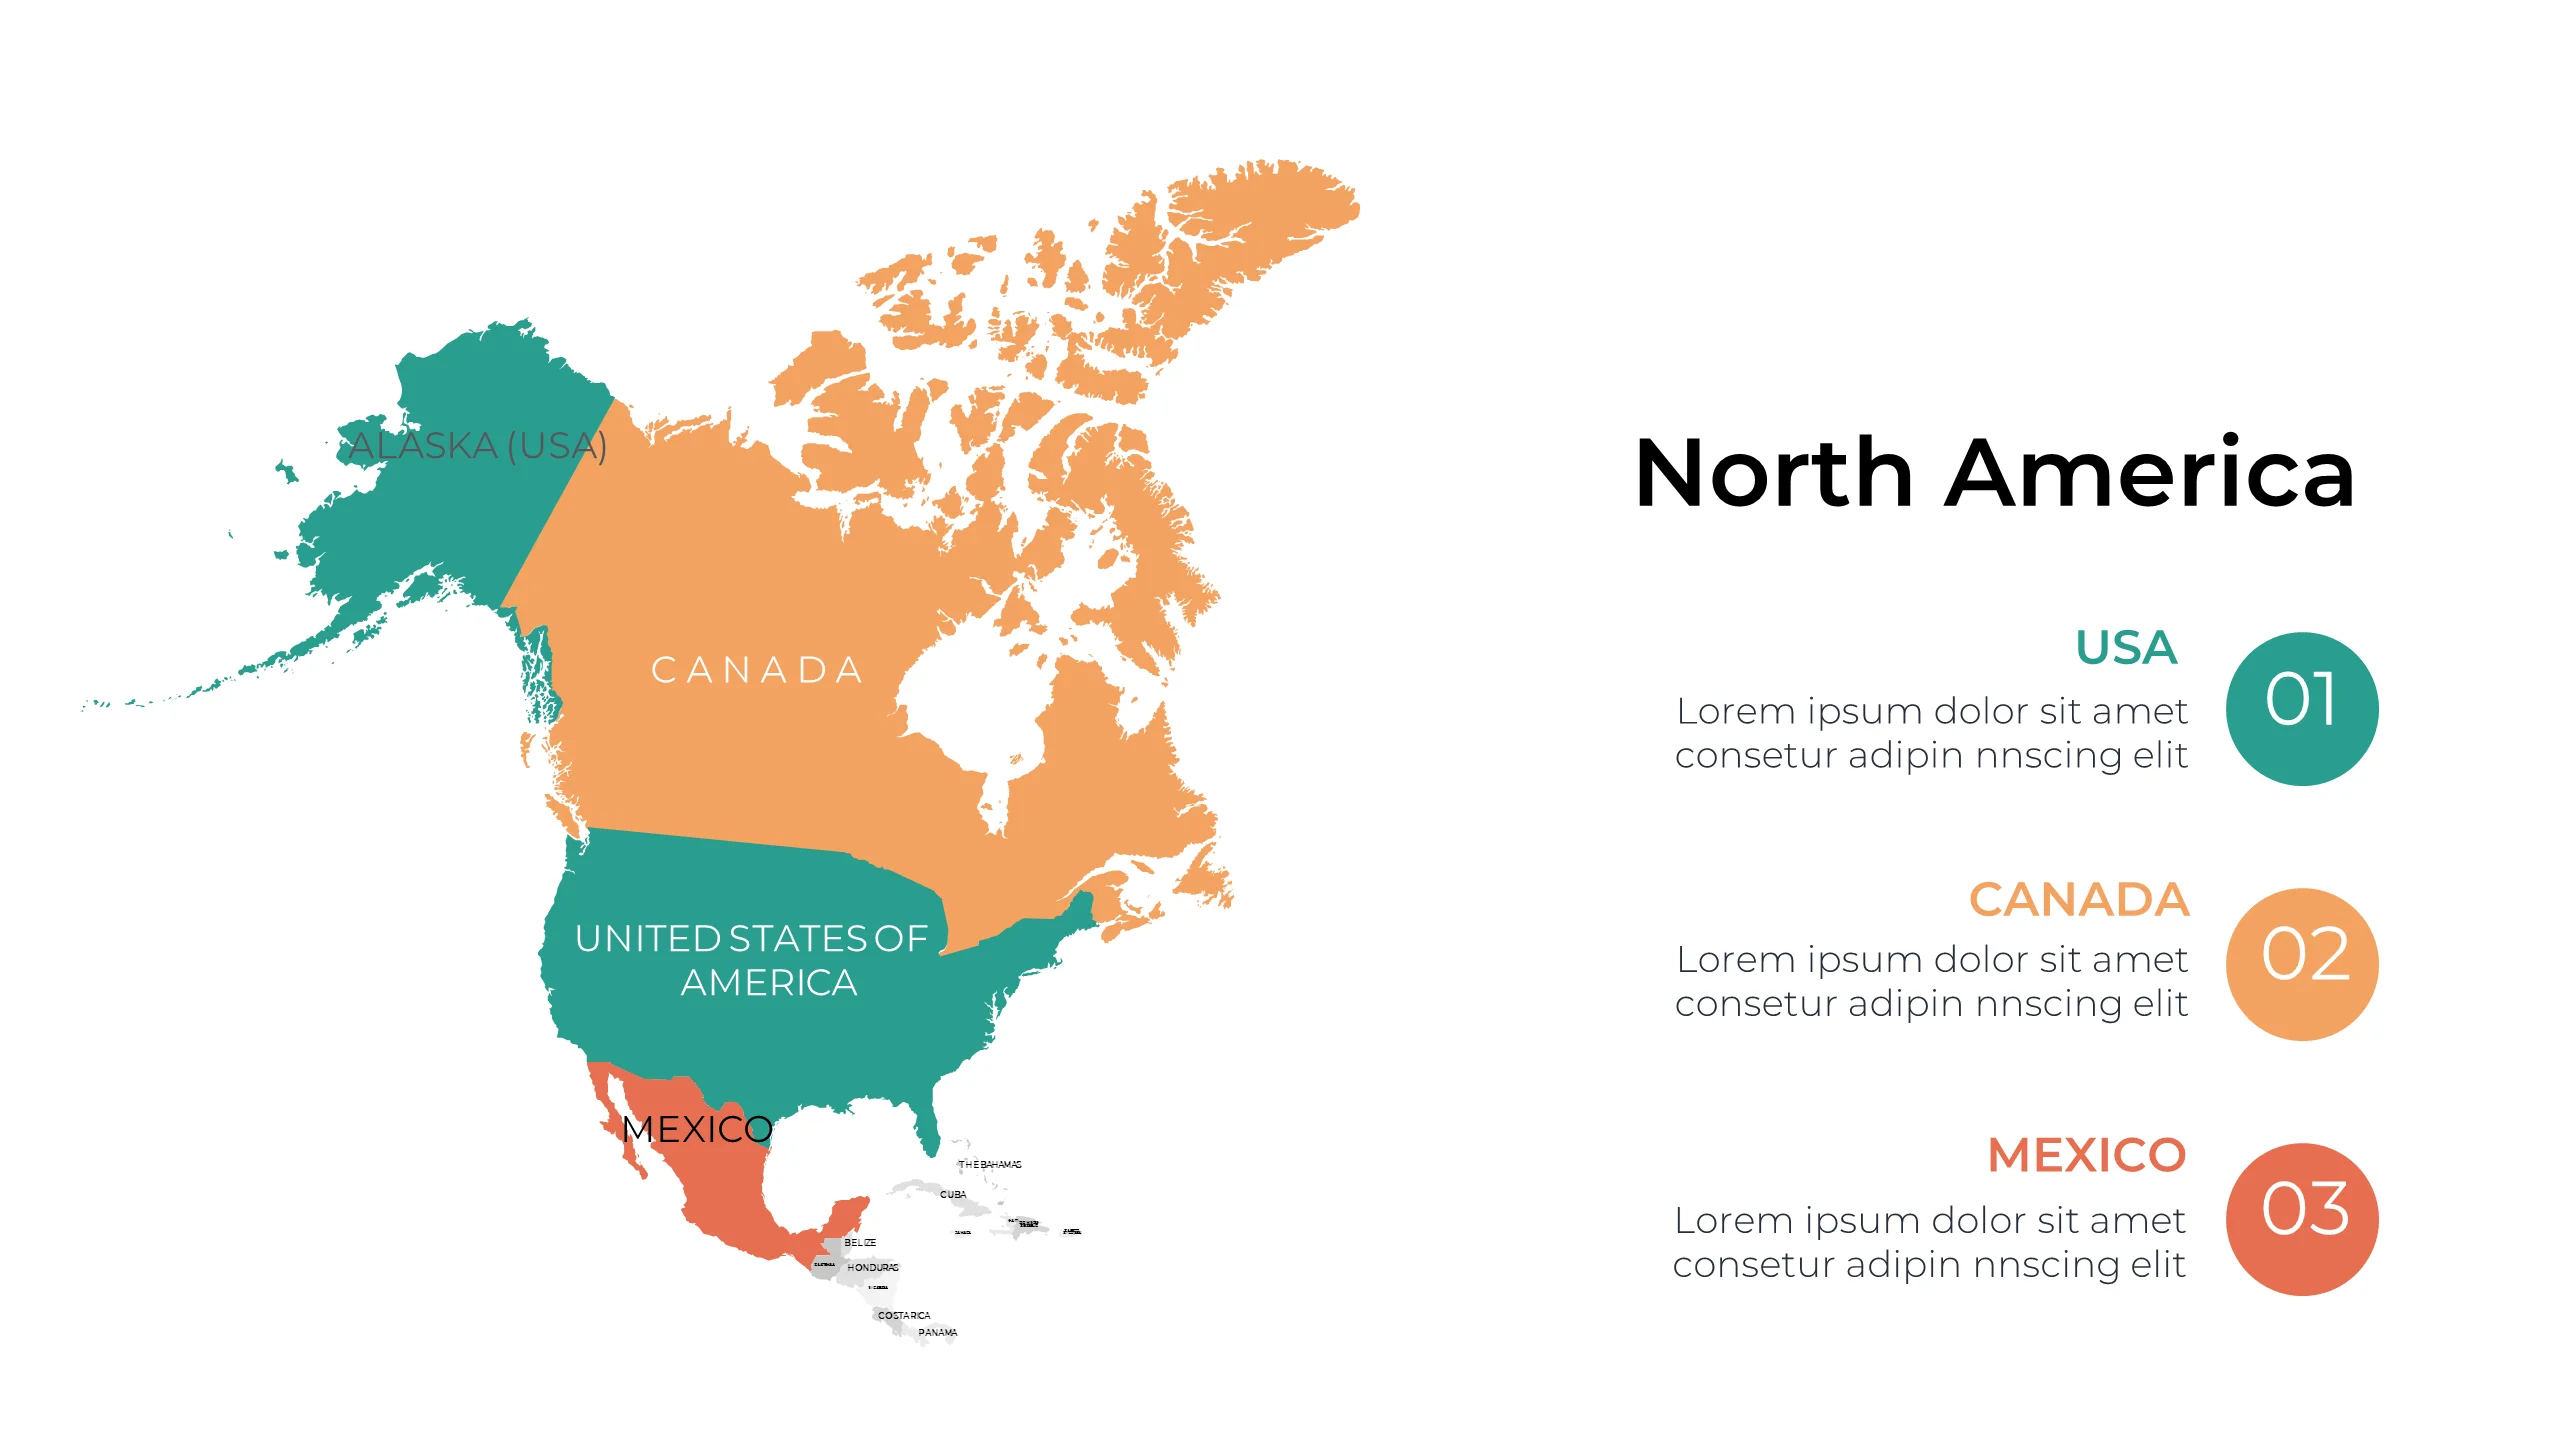 Editable North America Map